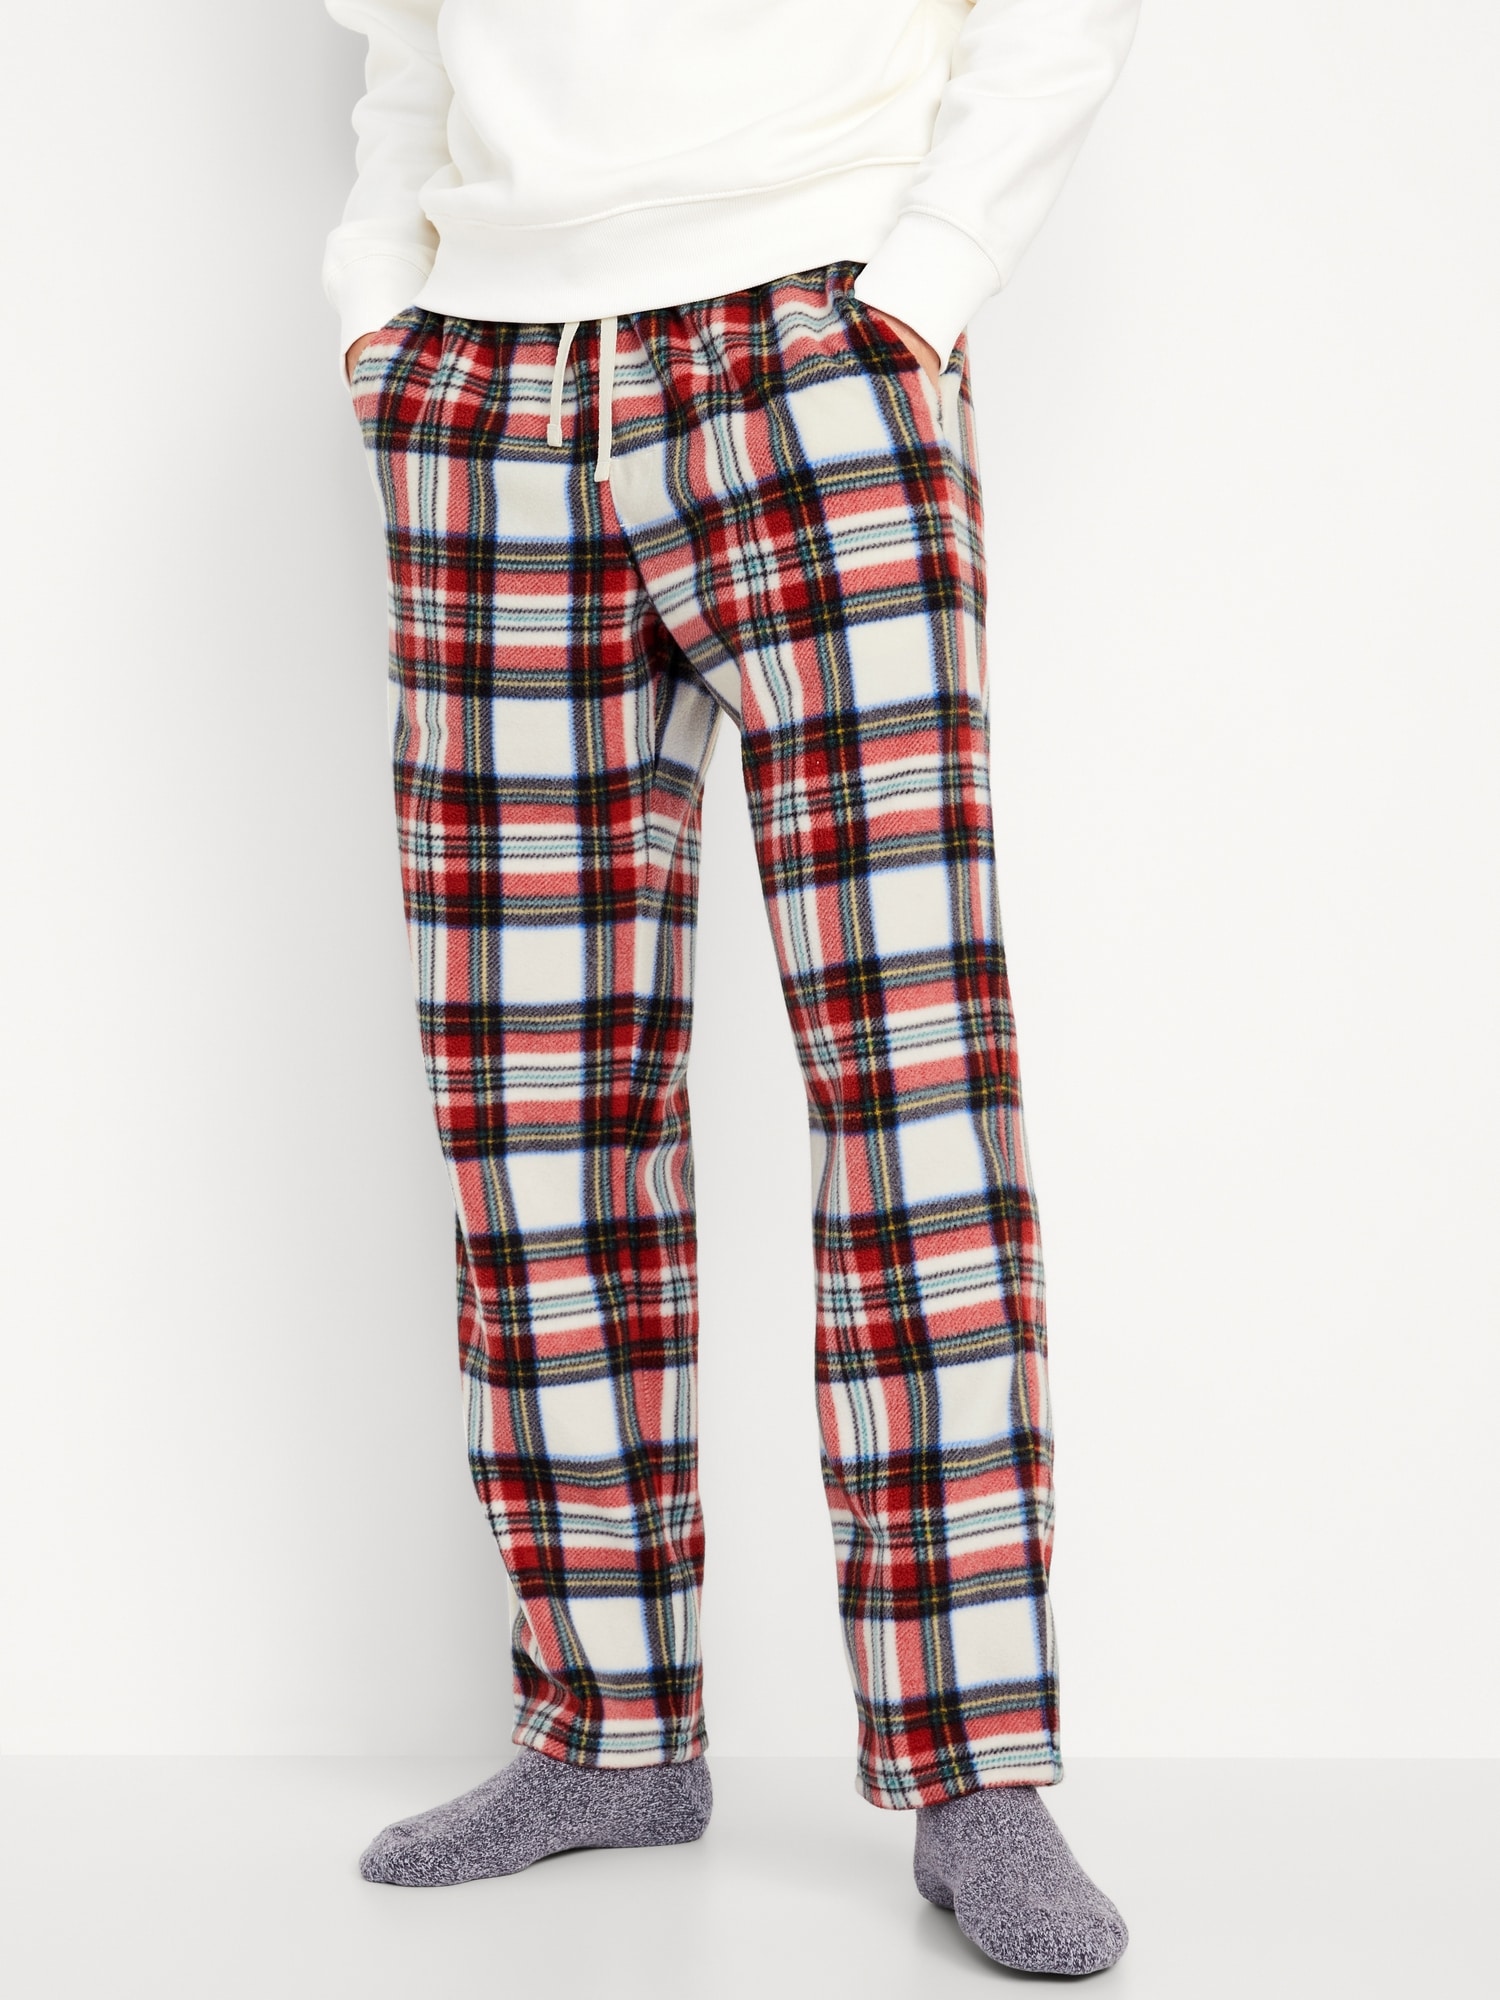 45910-1A-XL #FollowMe Polar Fleece Pajama Pants Set for Men / Sleepwear /  PJs (Medium, Black Top / White Buffalo Plaid Pant) - Just Love Fashion